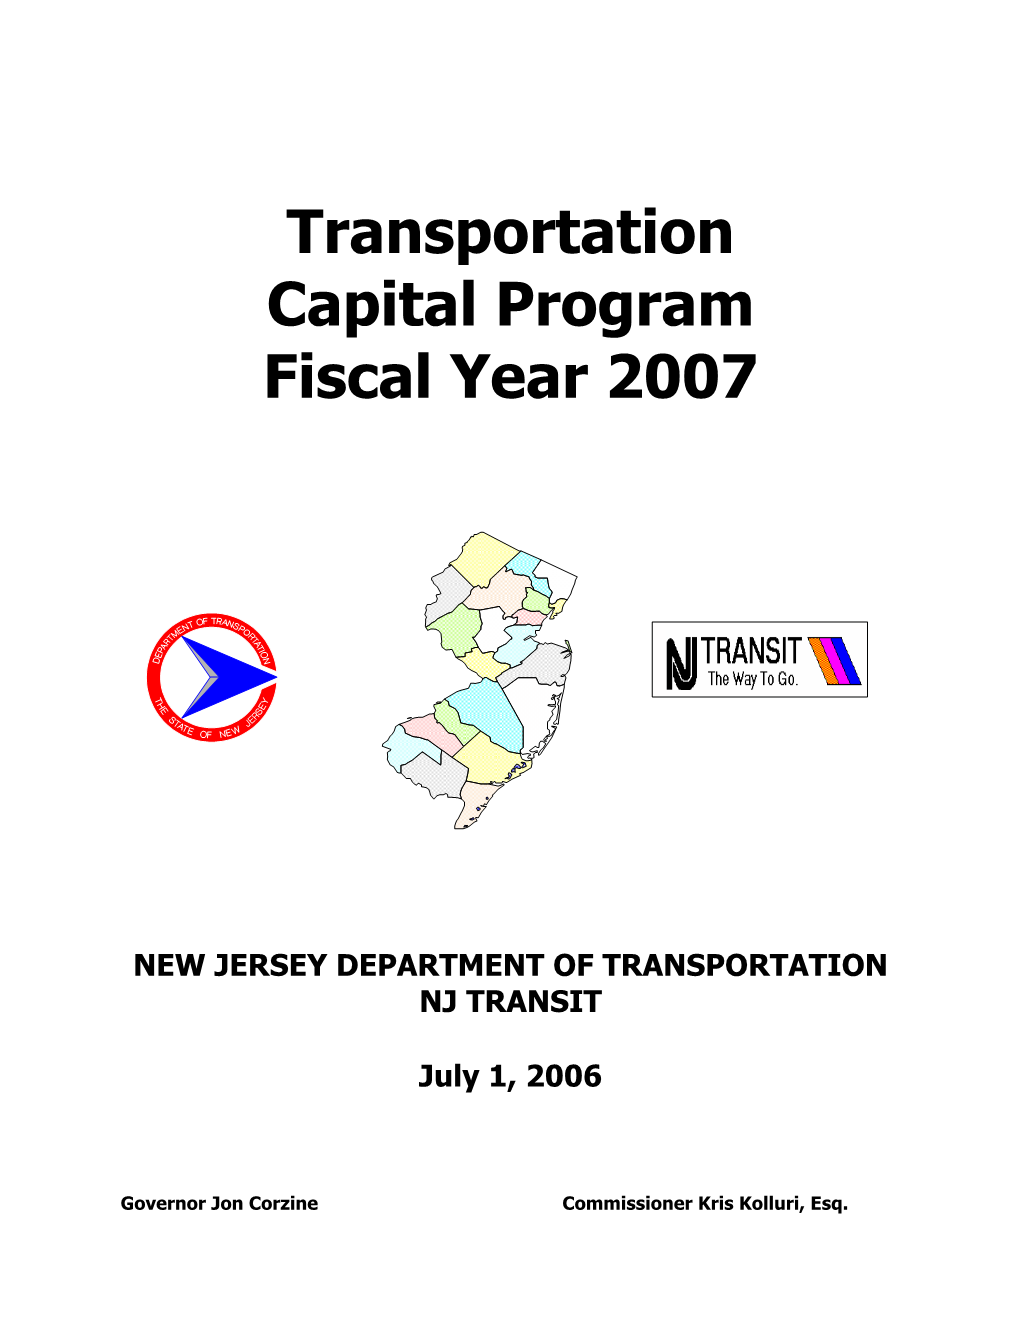 Transportation Capital Program Fiscal Year 2007